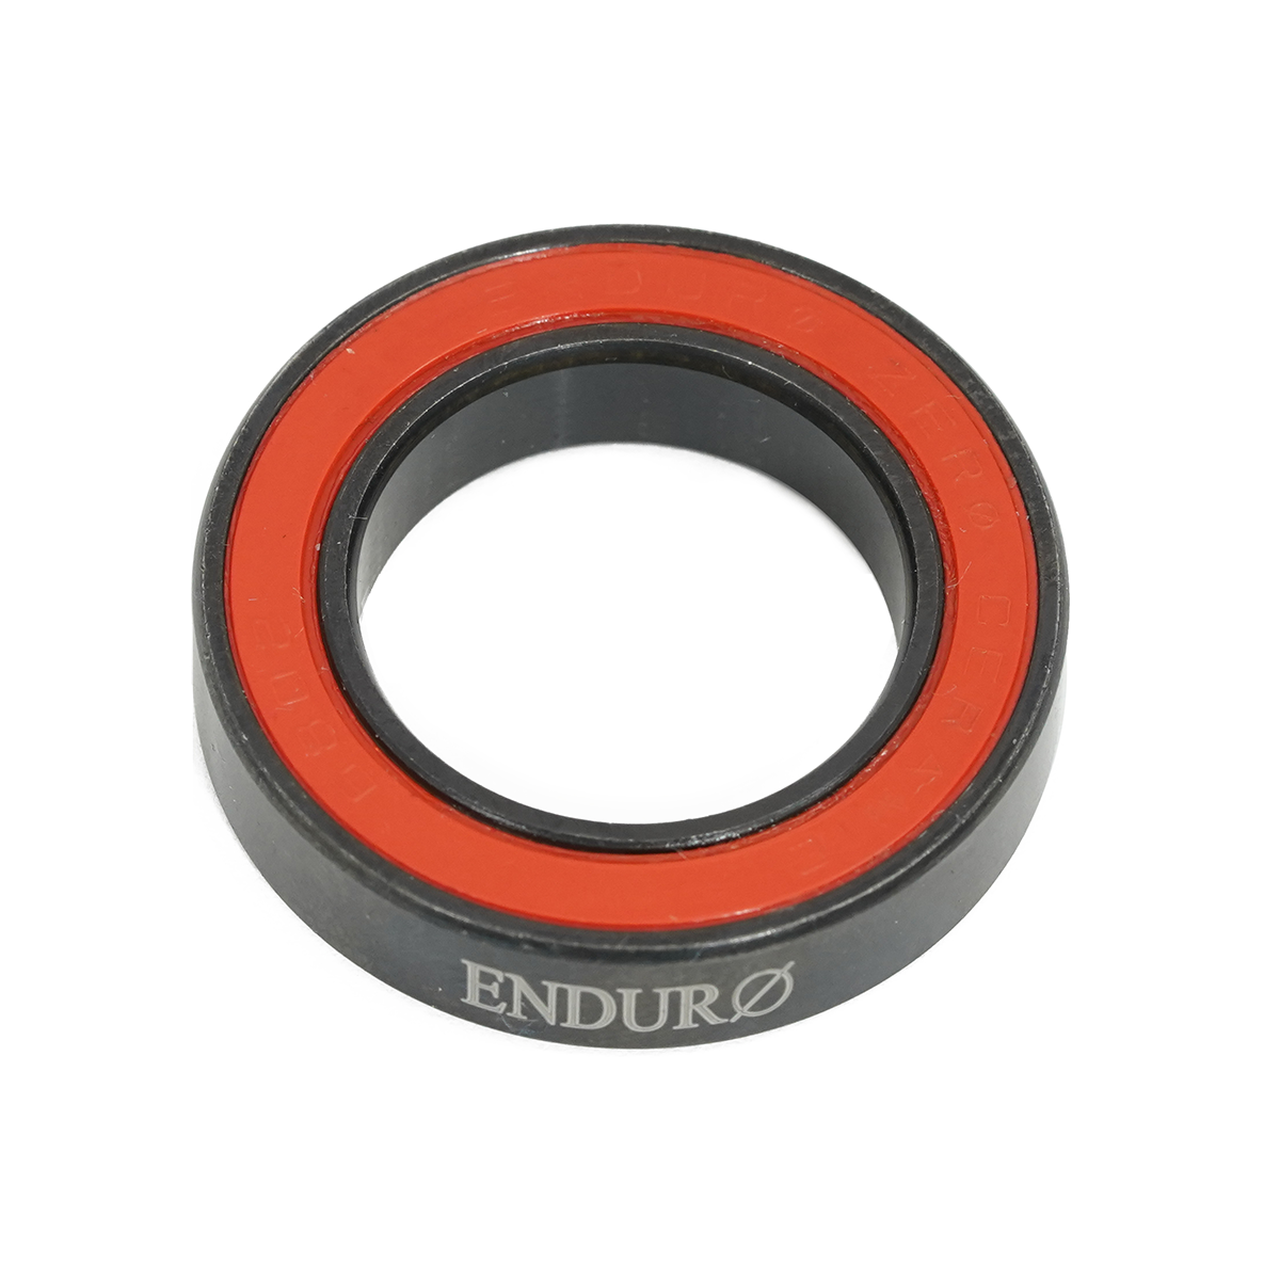 Enduro CO 6802 VV - Enduro Zero, Black-Oxide, Ceramic Hybrid, ABEC-5, Radial Bearing (C3 Clearance) - 15mm x 24mm x 5mm